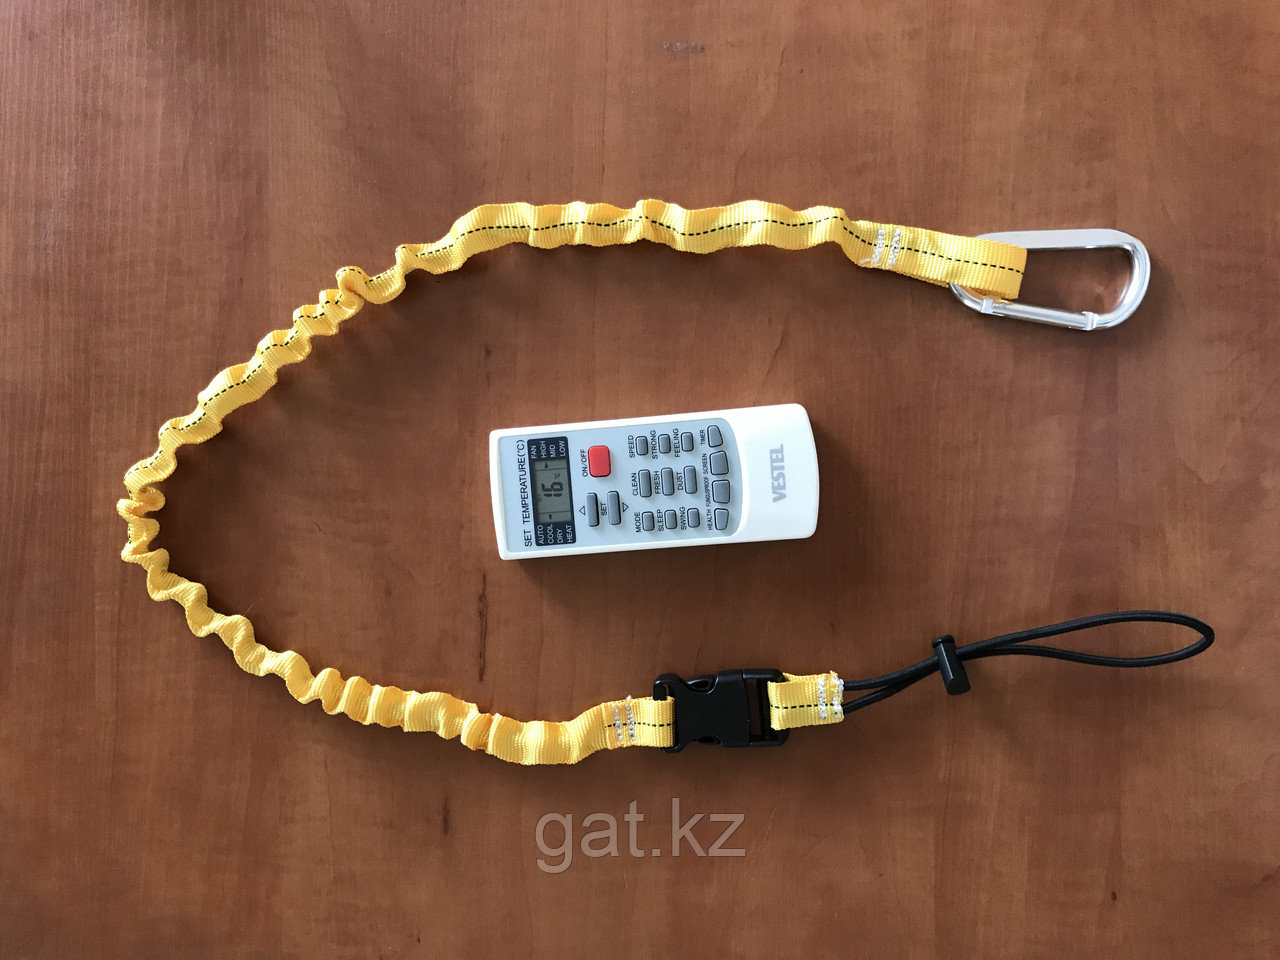 Шнурок для инструмента: kazat tools rope